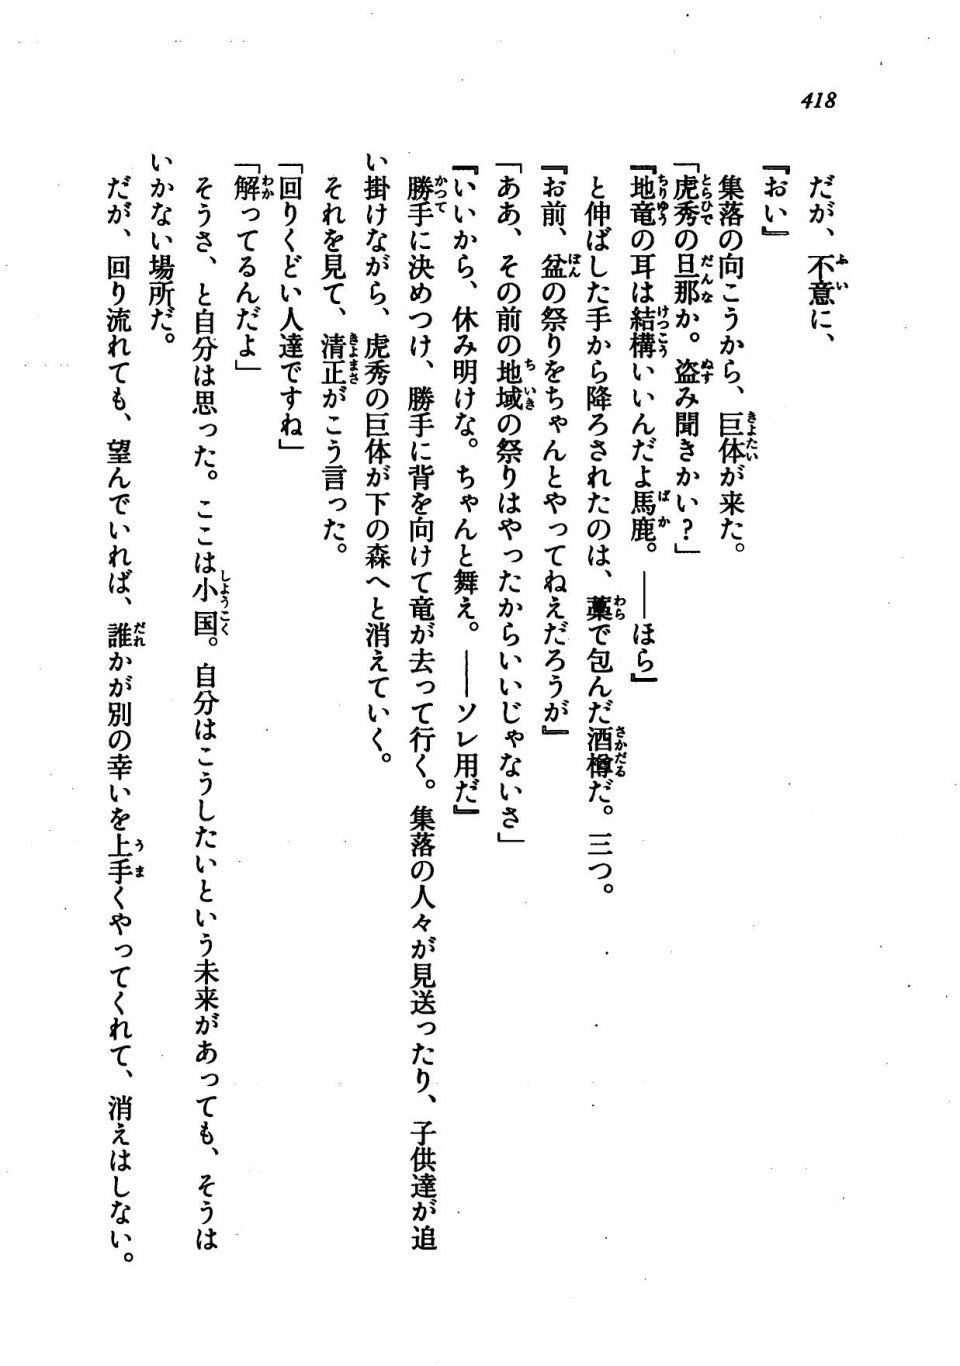 Kyoukai Senjou no Horizon LN Vol 21(8C) Part 1 - Photo #417